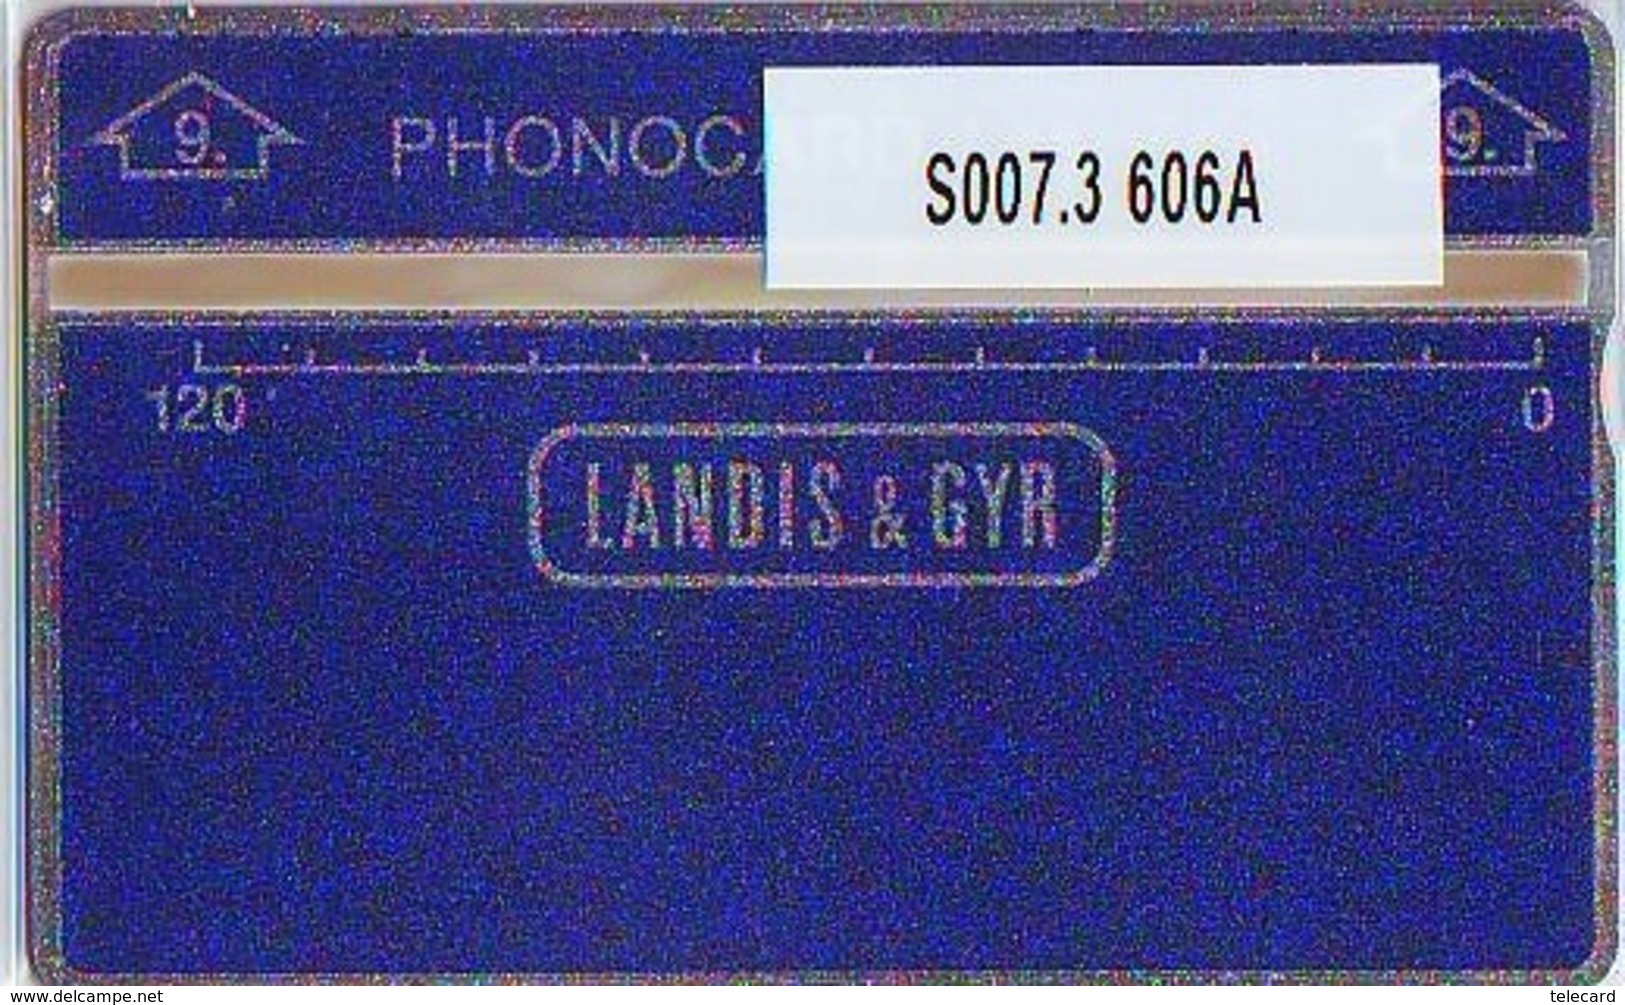 NEDERLAND LANDIS&GYR * SODECO * SERVICE CARD NR S007.3  606A  "9" ONGEBRUIKT *  MINT - [4] Test & Services